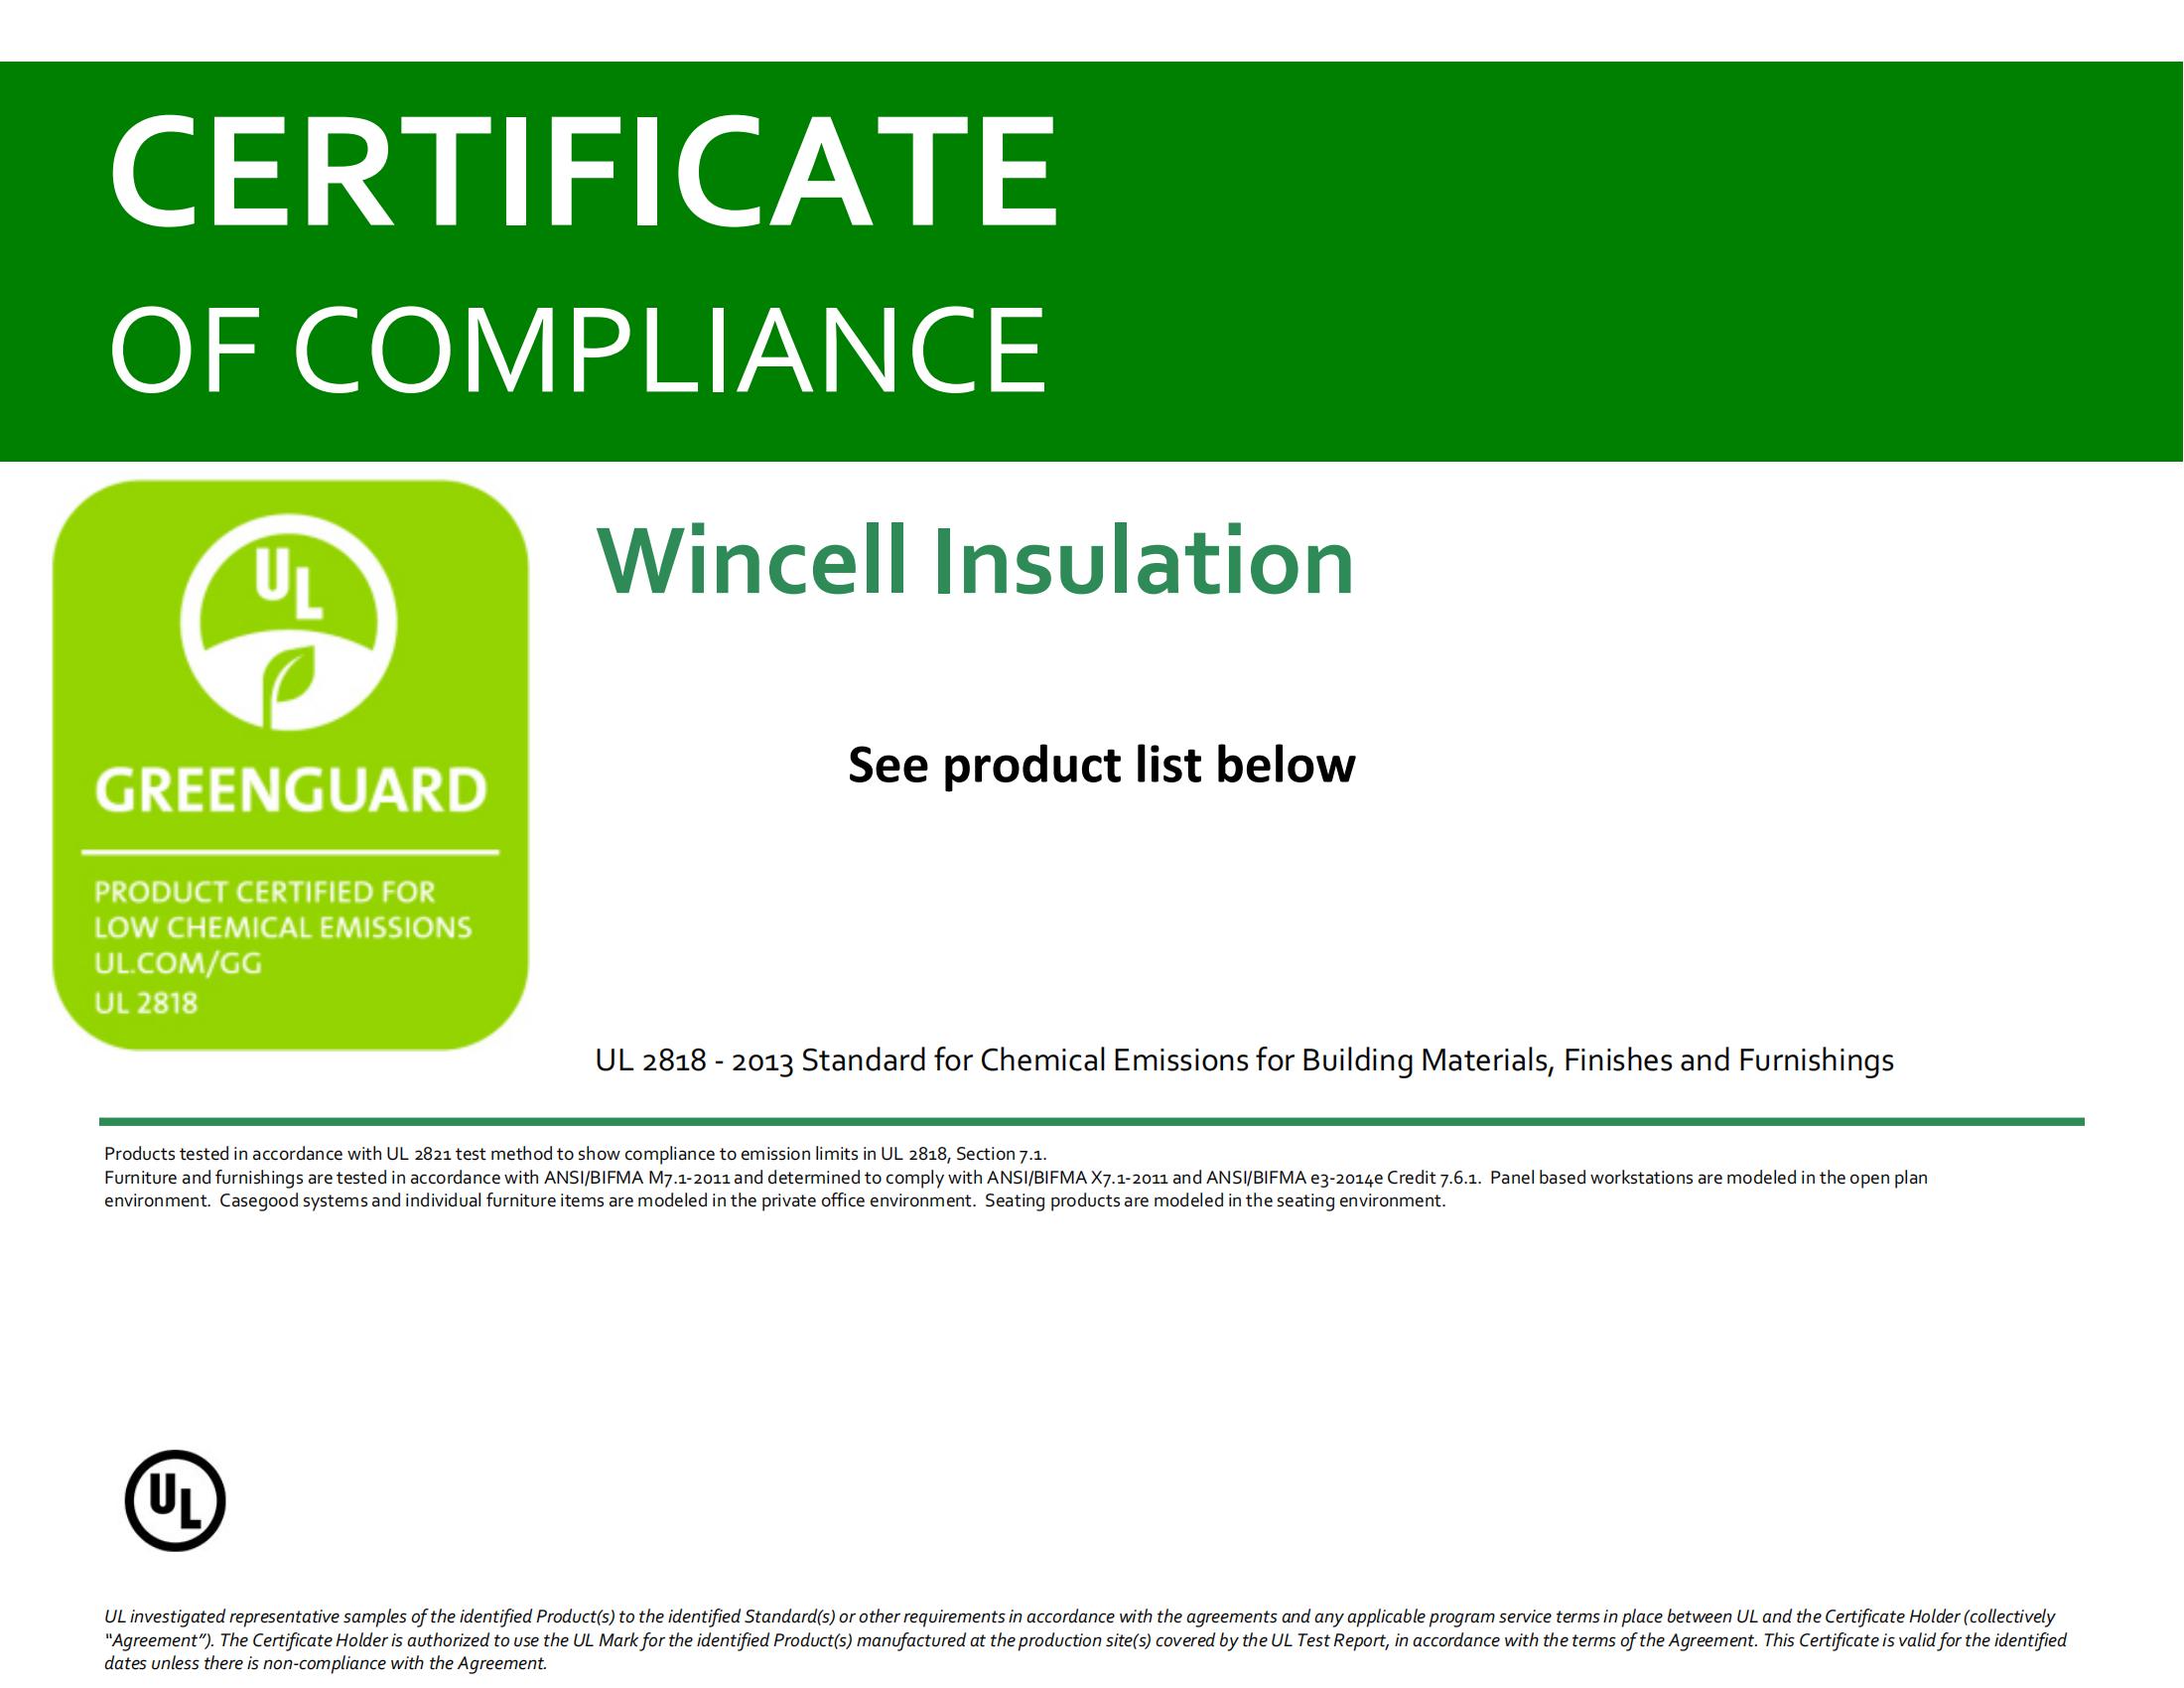 GREENGUARD-Wincell Insulation_00.jpg